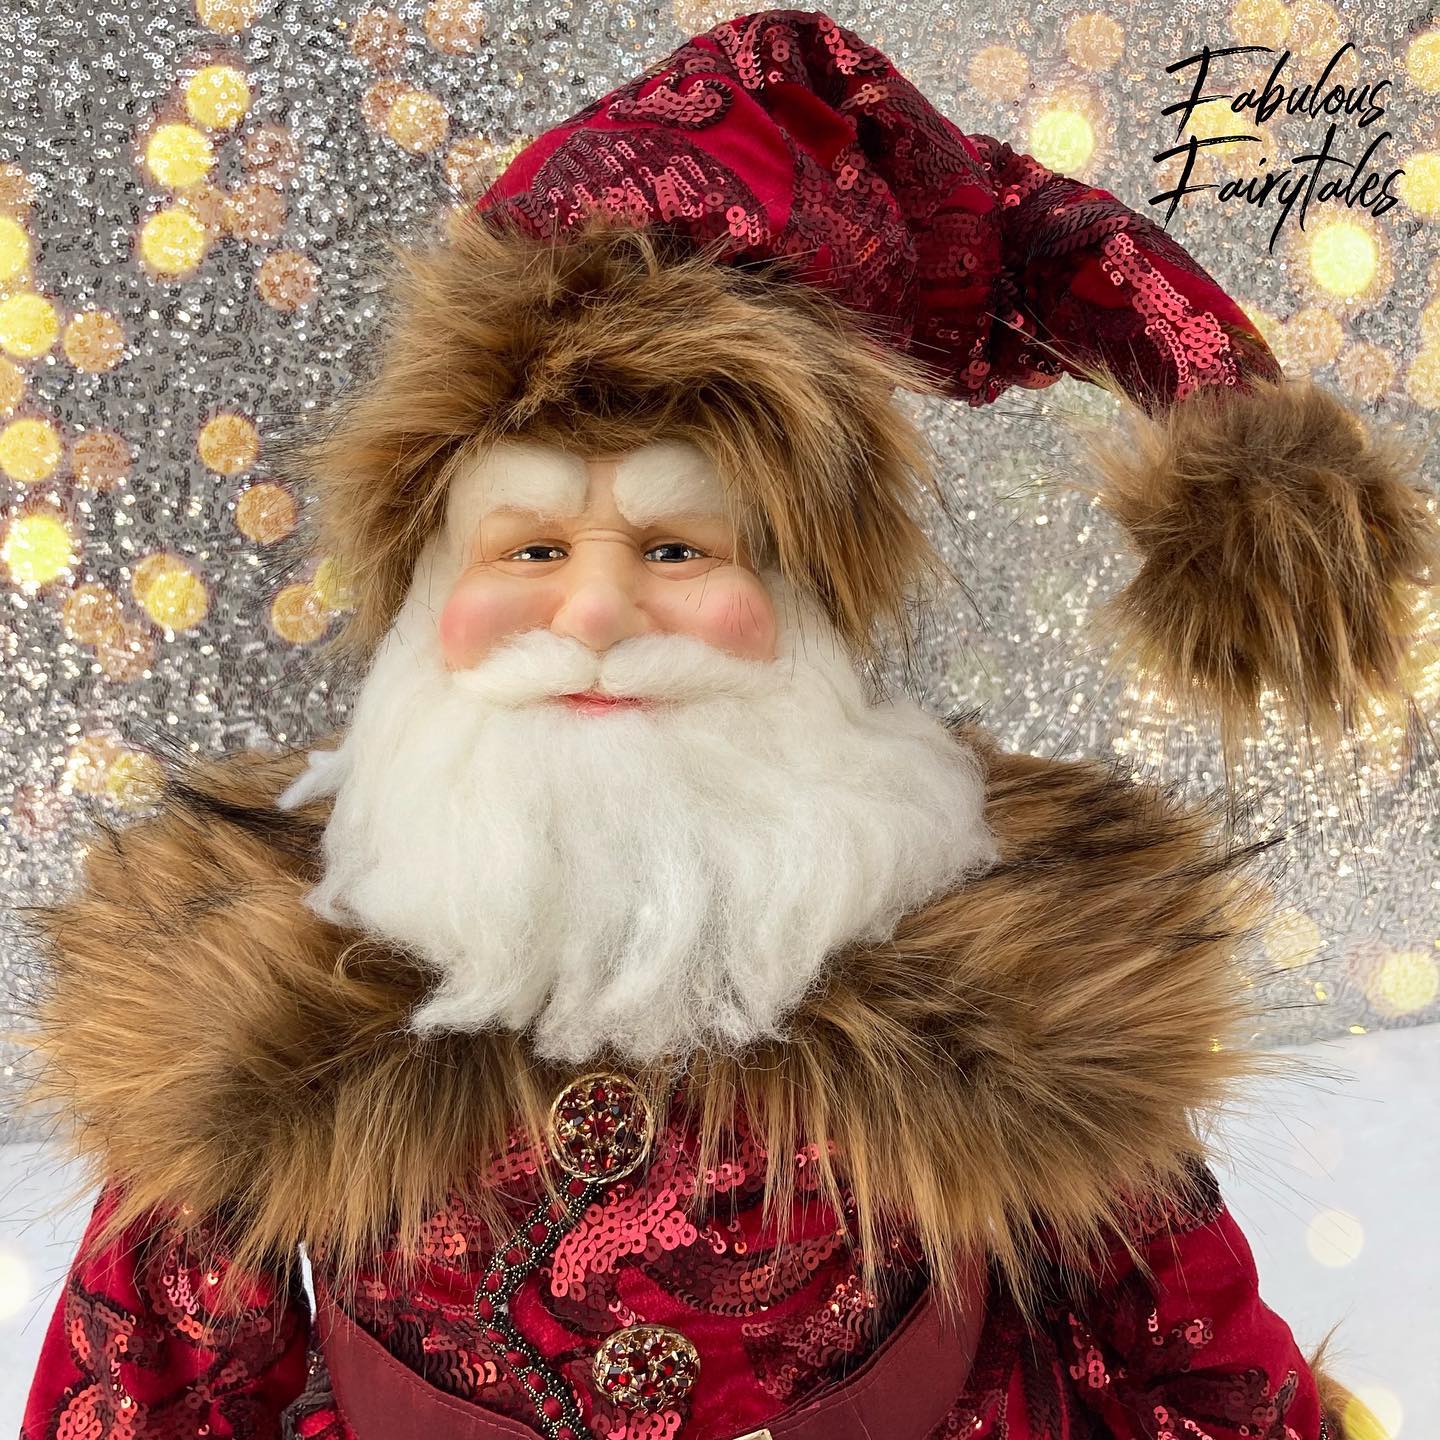 Fabulous Fairytales Christmas Decorations Shop London UK